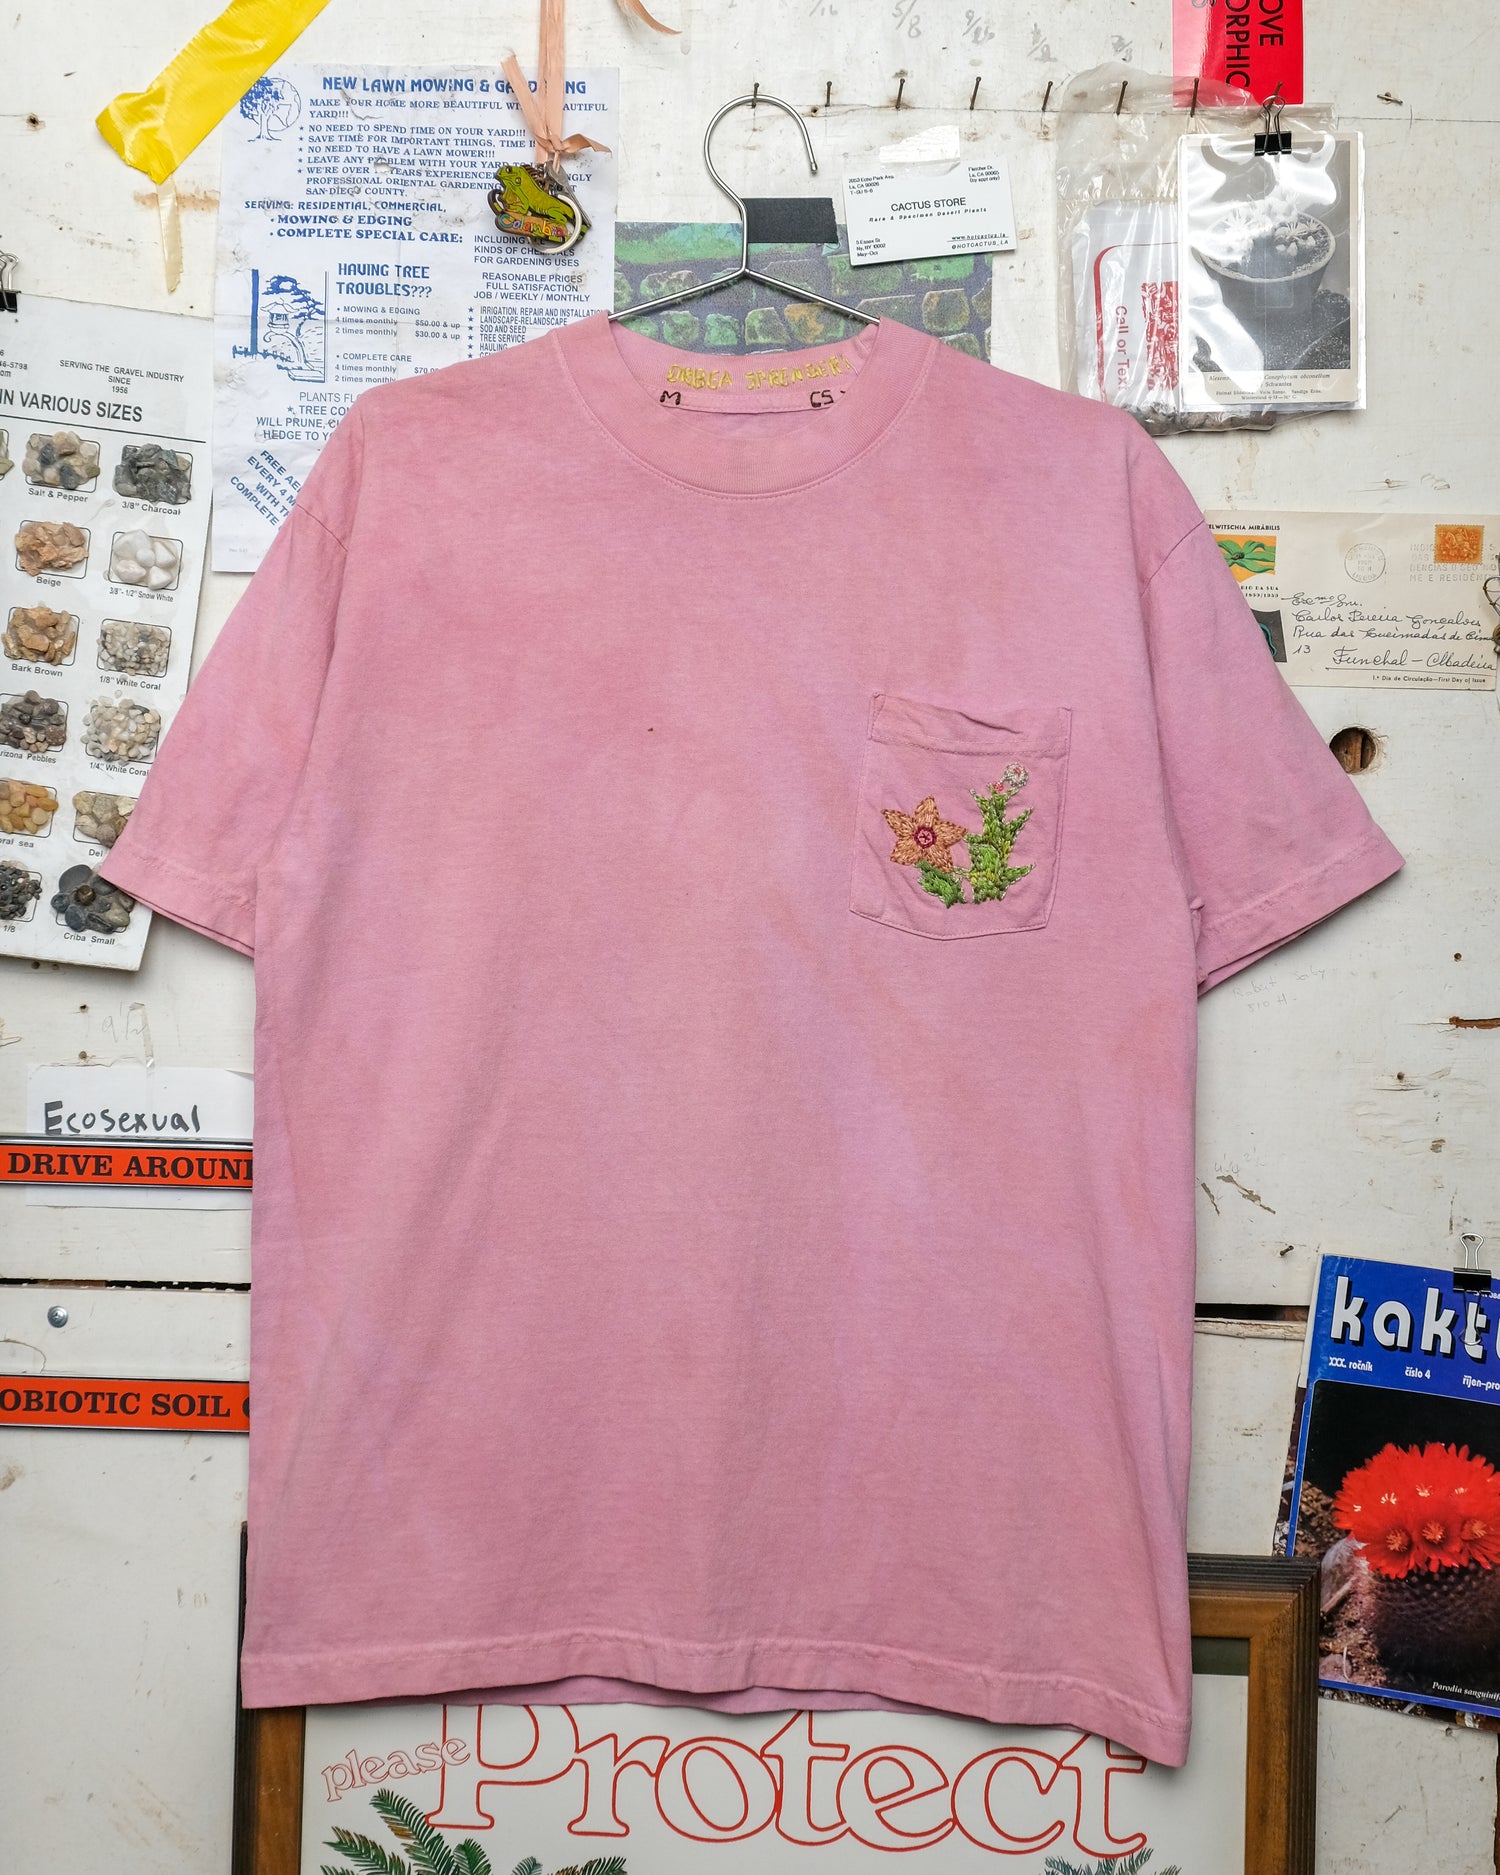 Orbea sprengeri (M) Shirt